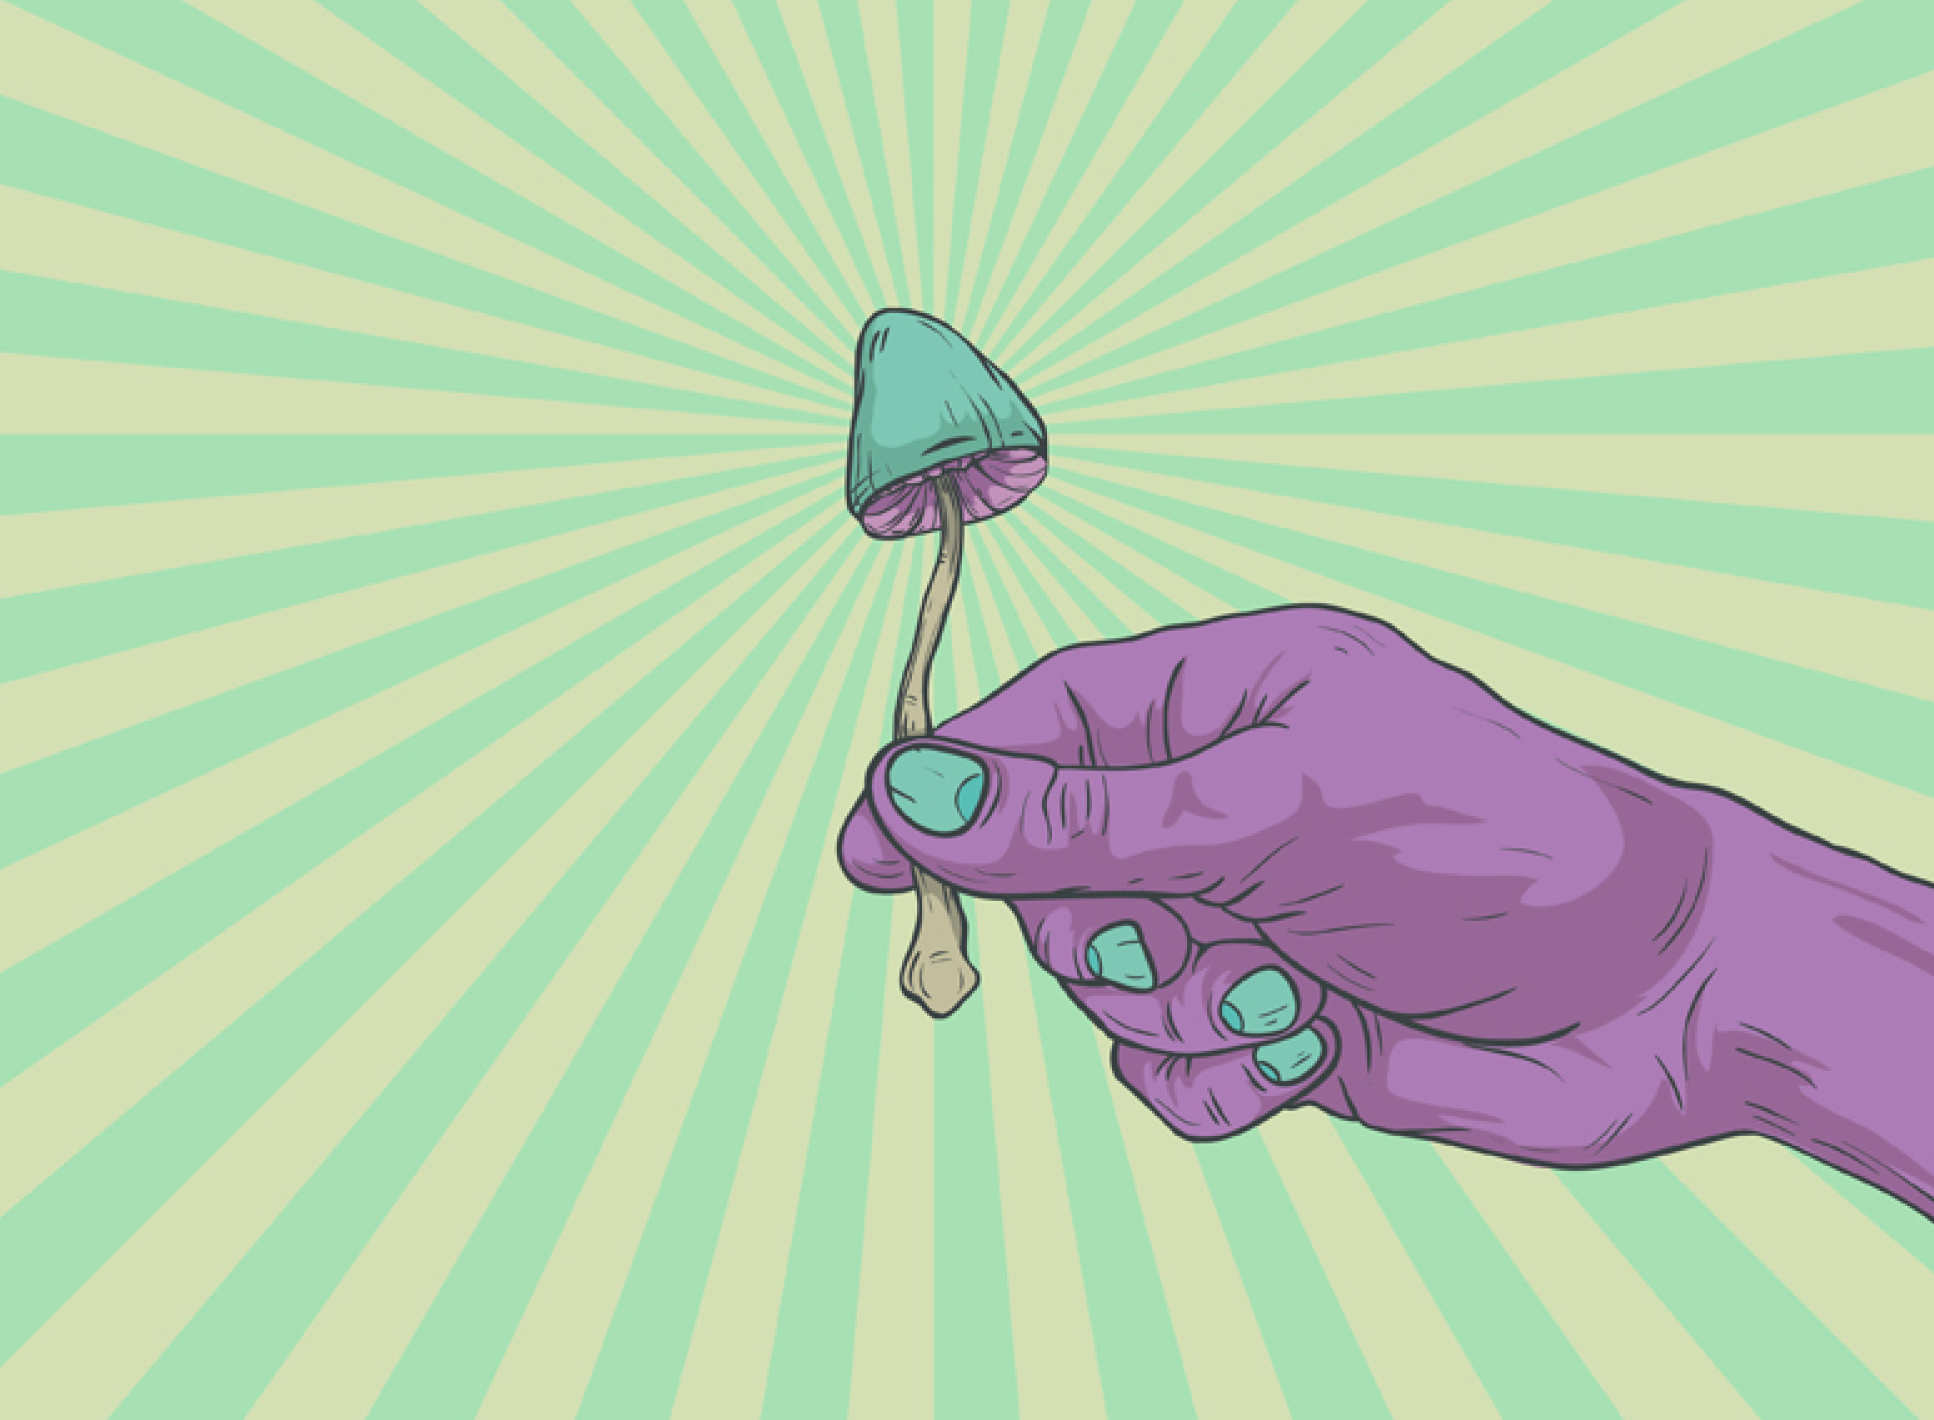 Conceptual image of hand holding a magic mushroom